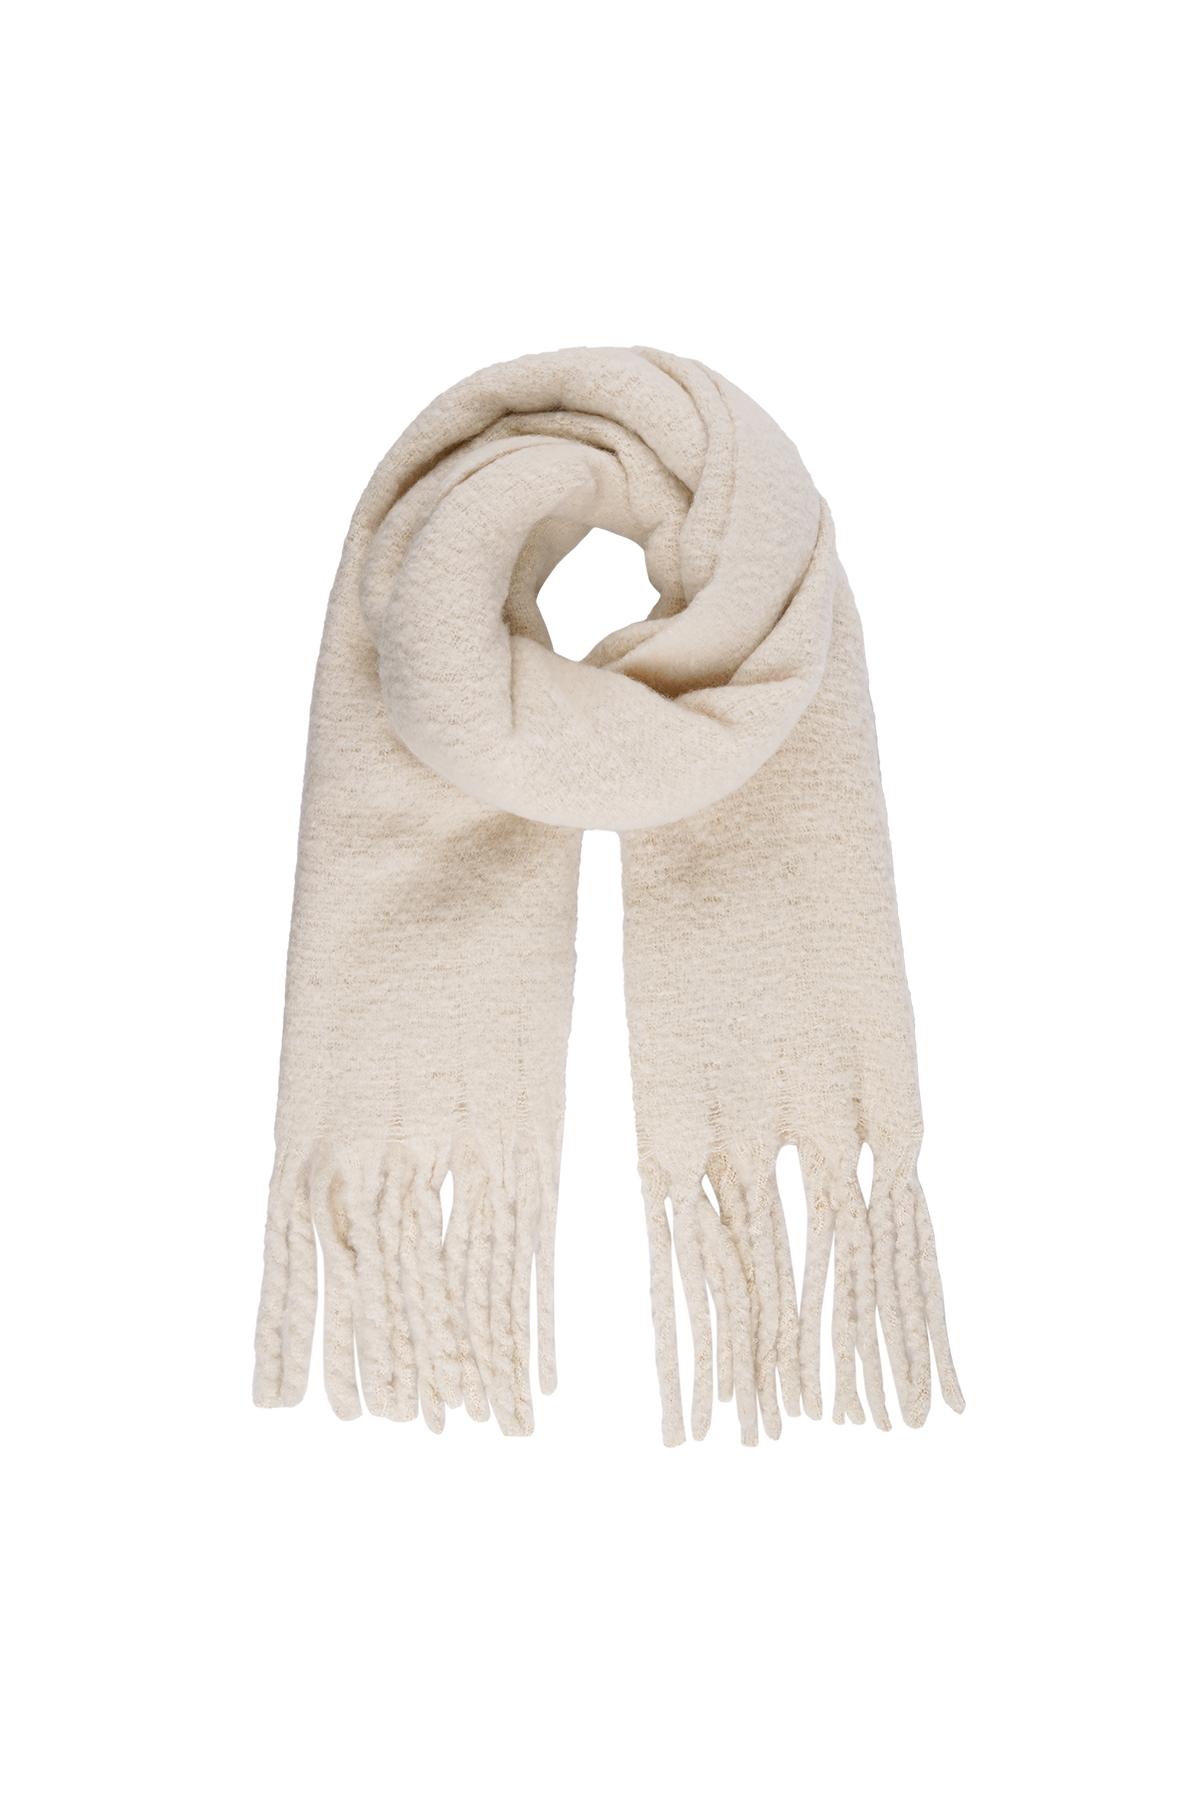 Calda sciarpa invernale tinta unita bianco sporco Off-white Polyester h5 